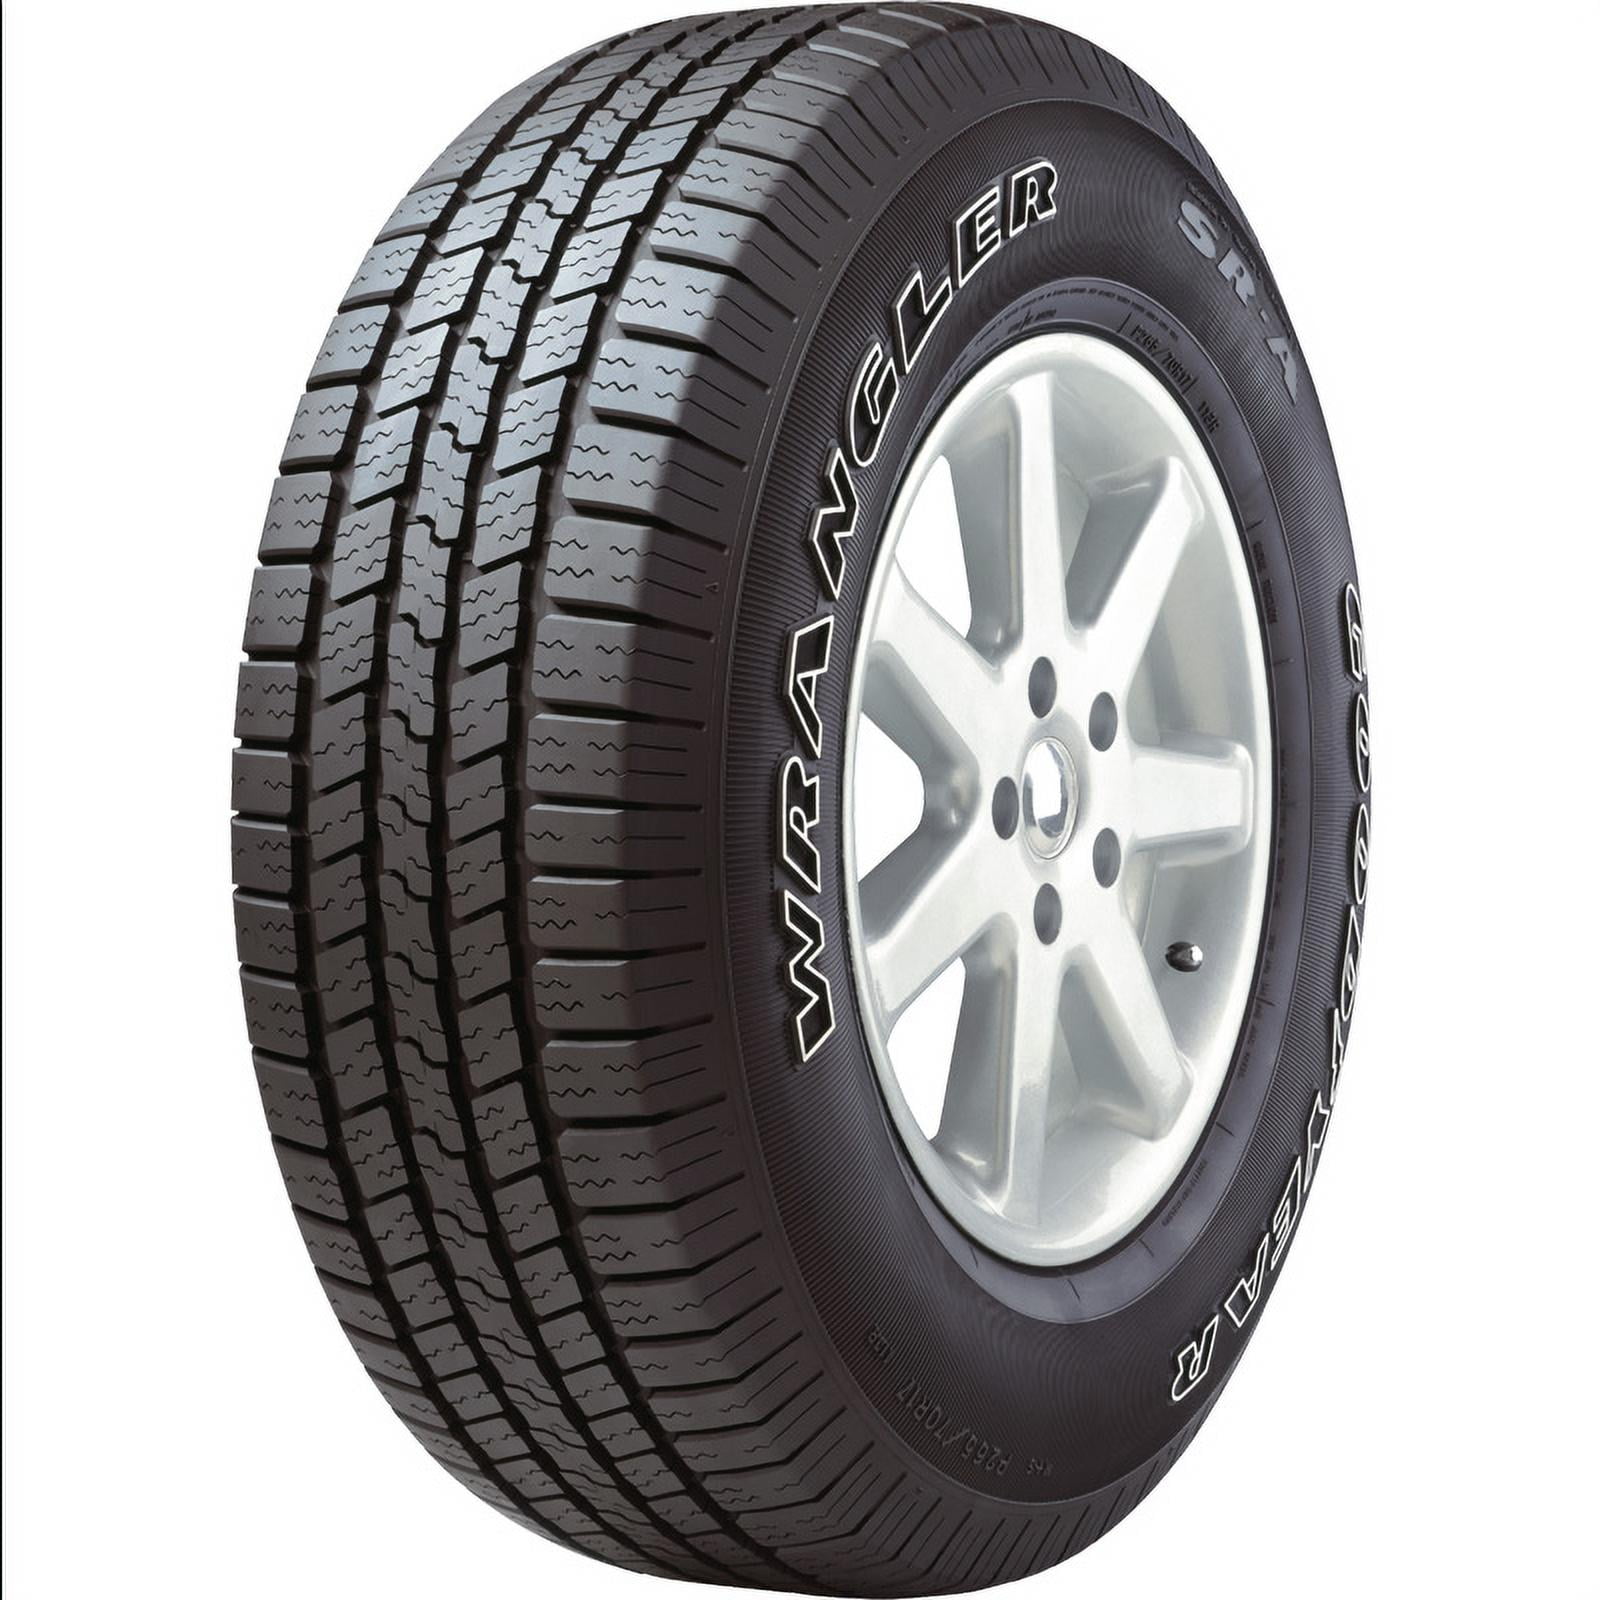 1 New Goodyear Wrangler Sr-a P245/70r16 Tires 2457016 245 70 16 